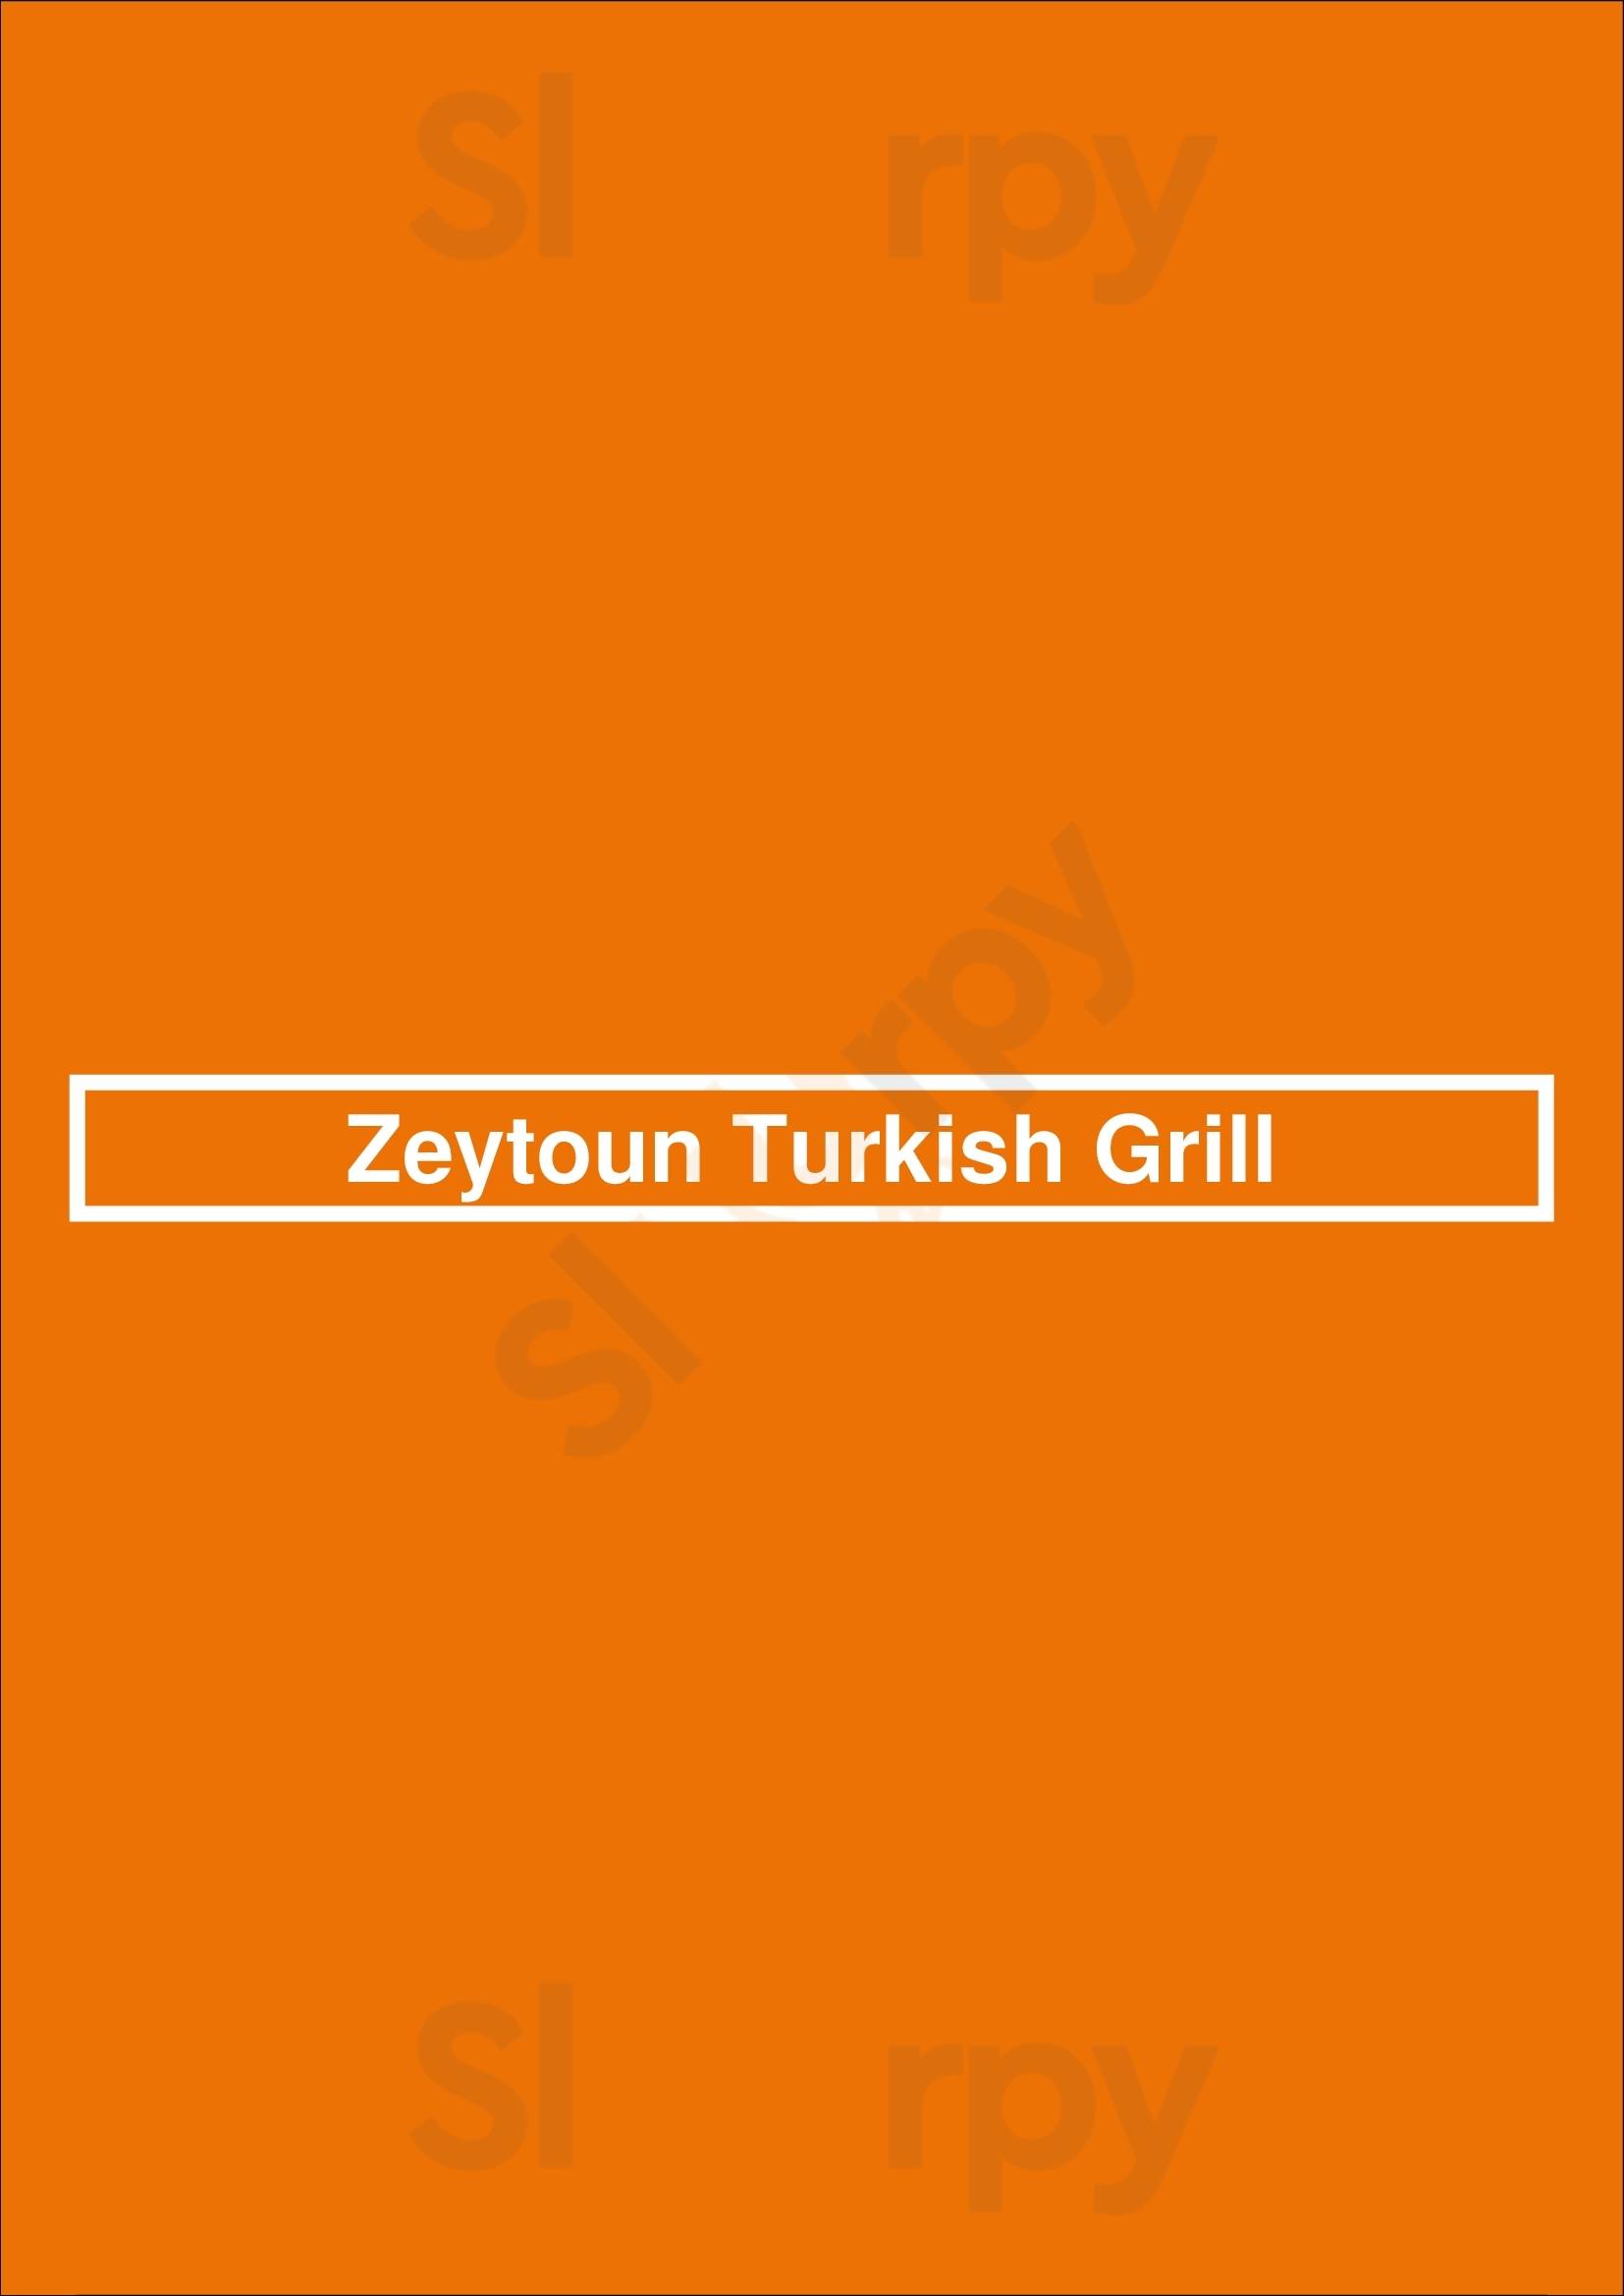 Zeytoun Turkish Grill London Menu - 1